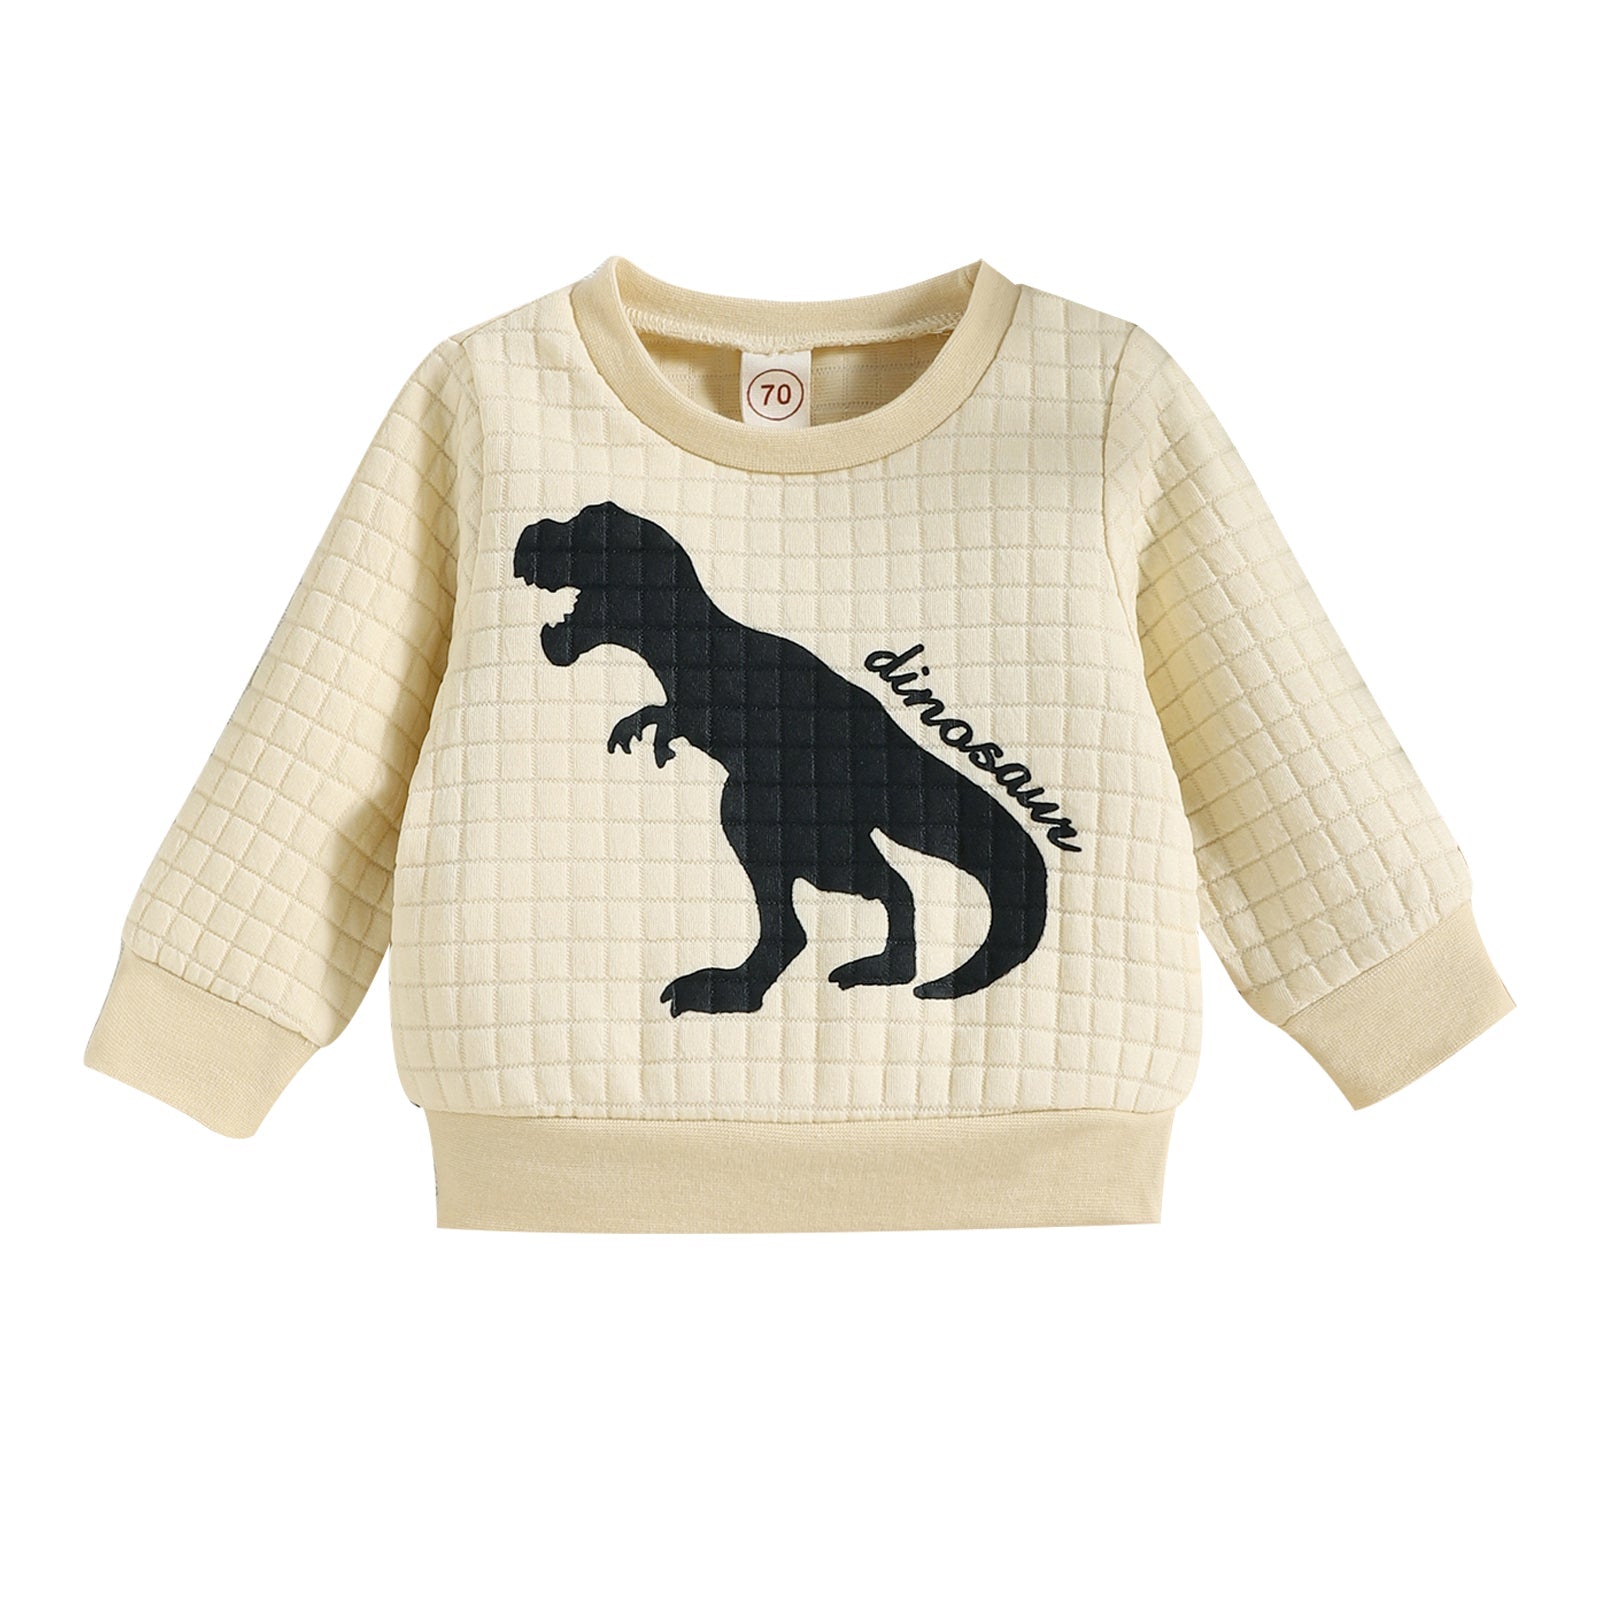 Baby Dinosaur Print Top.